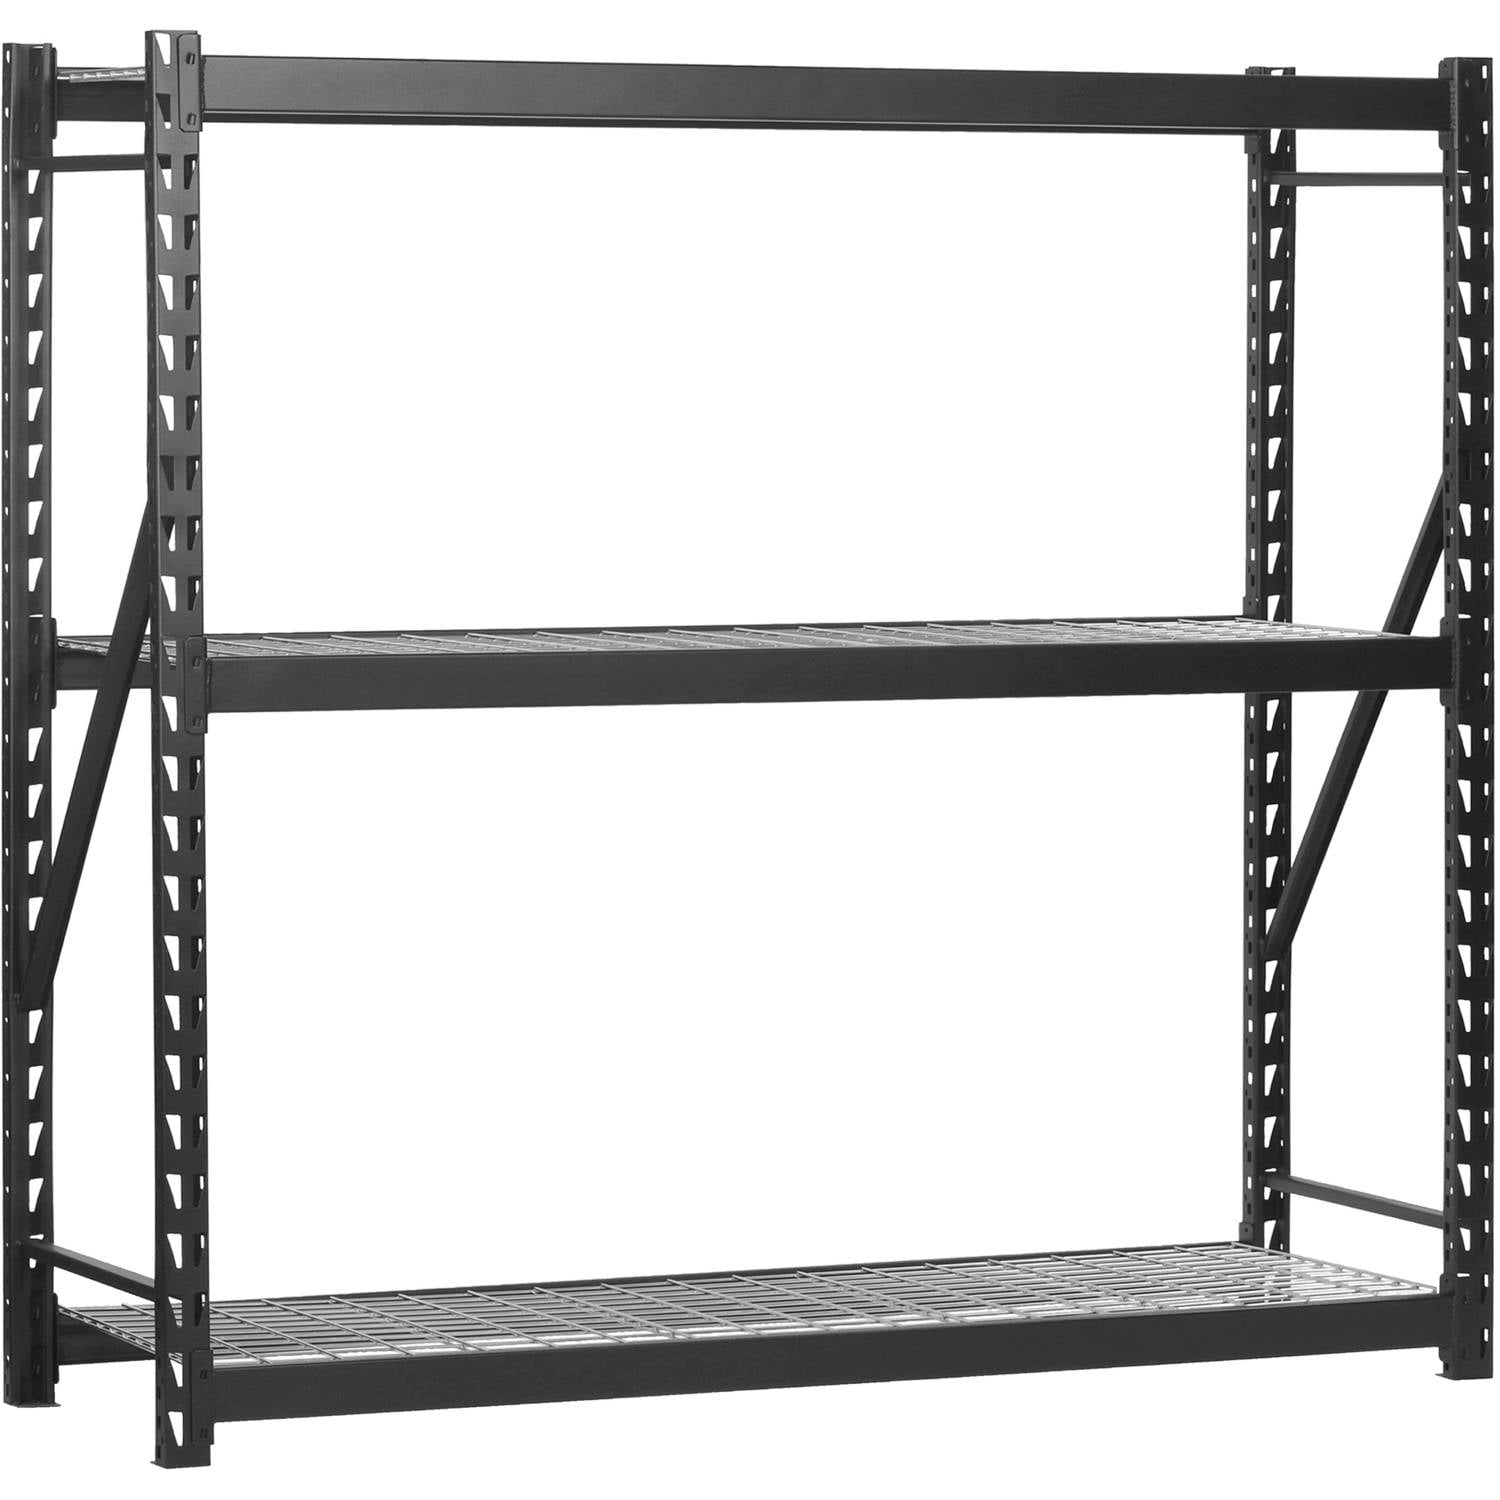 Steel Welded Storage Rack 150, Steel Freestanding Shelving Unit